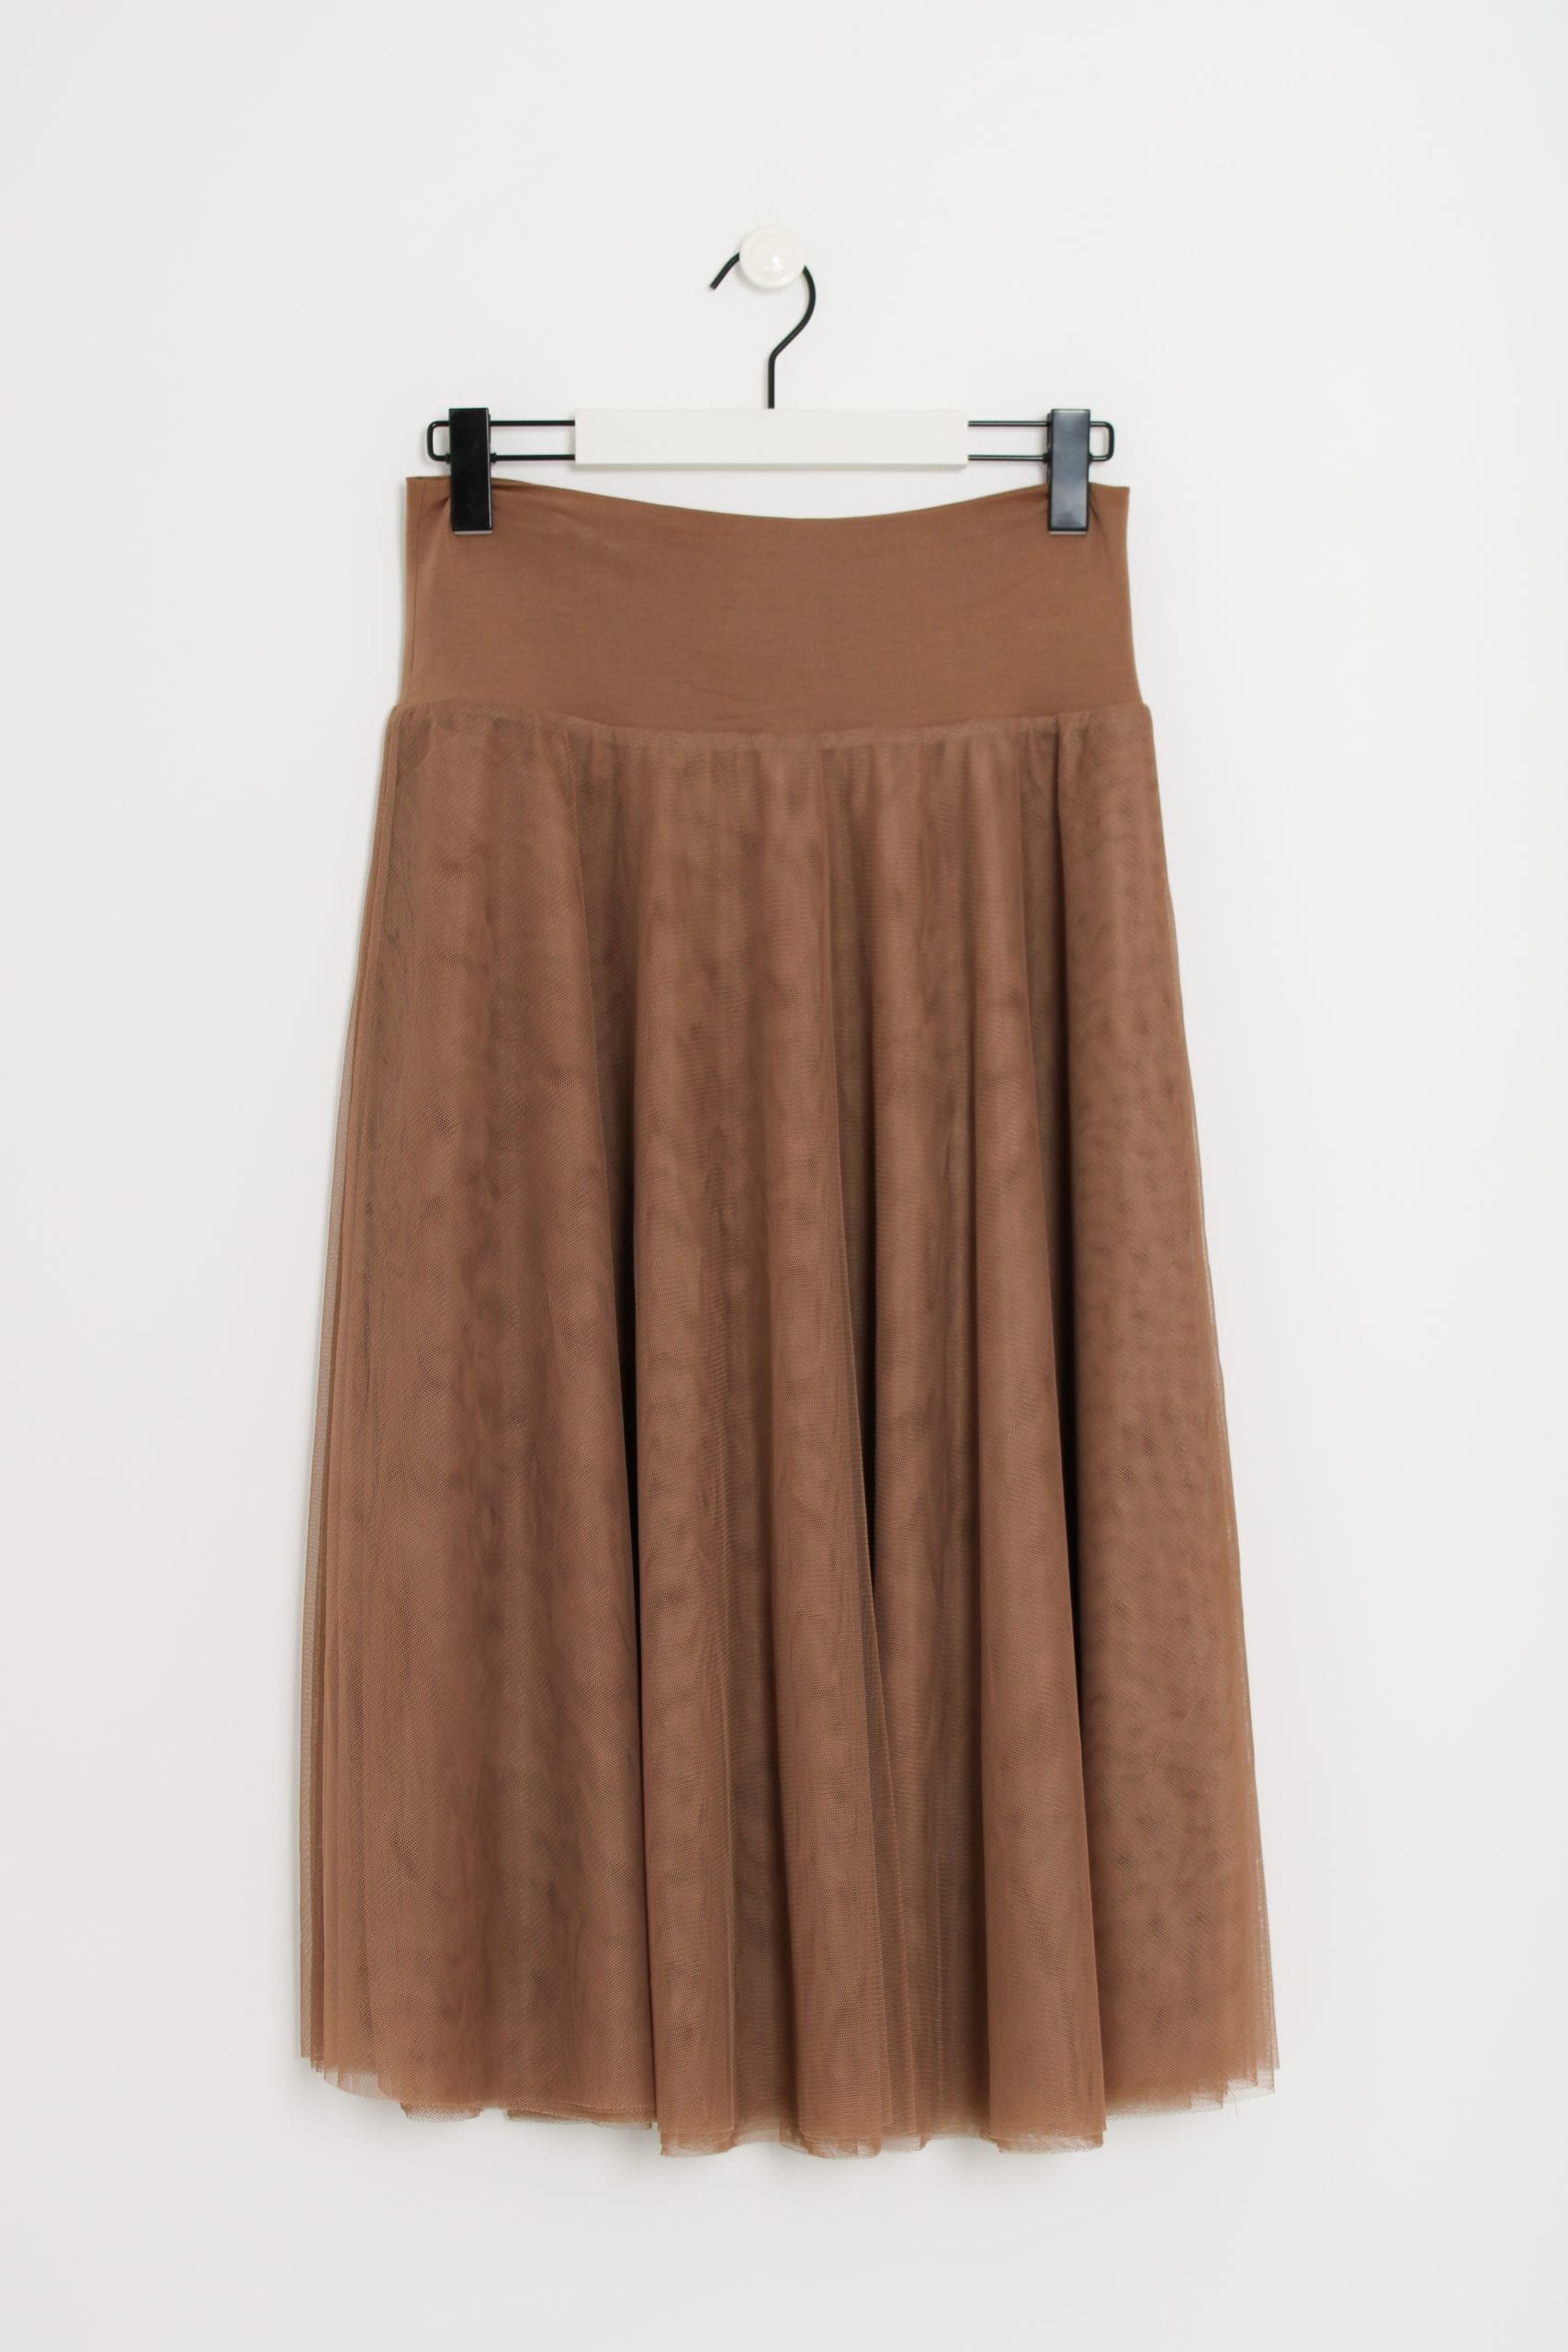 Brown mesh skirt - Swapology